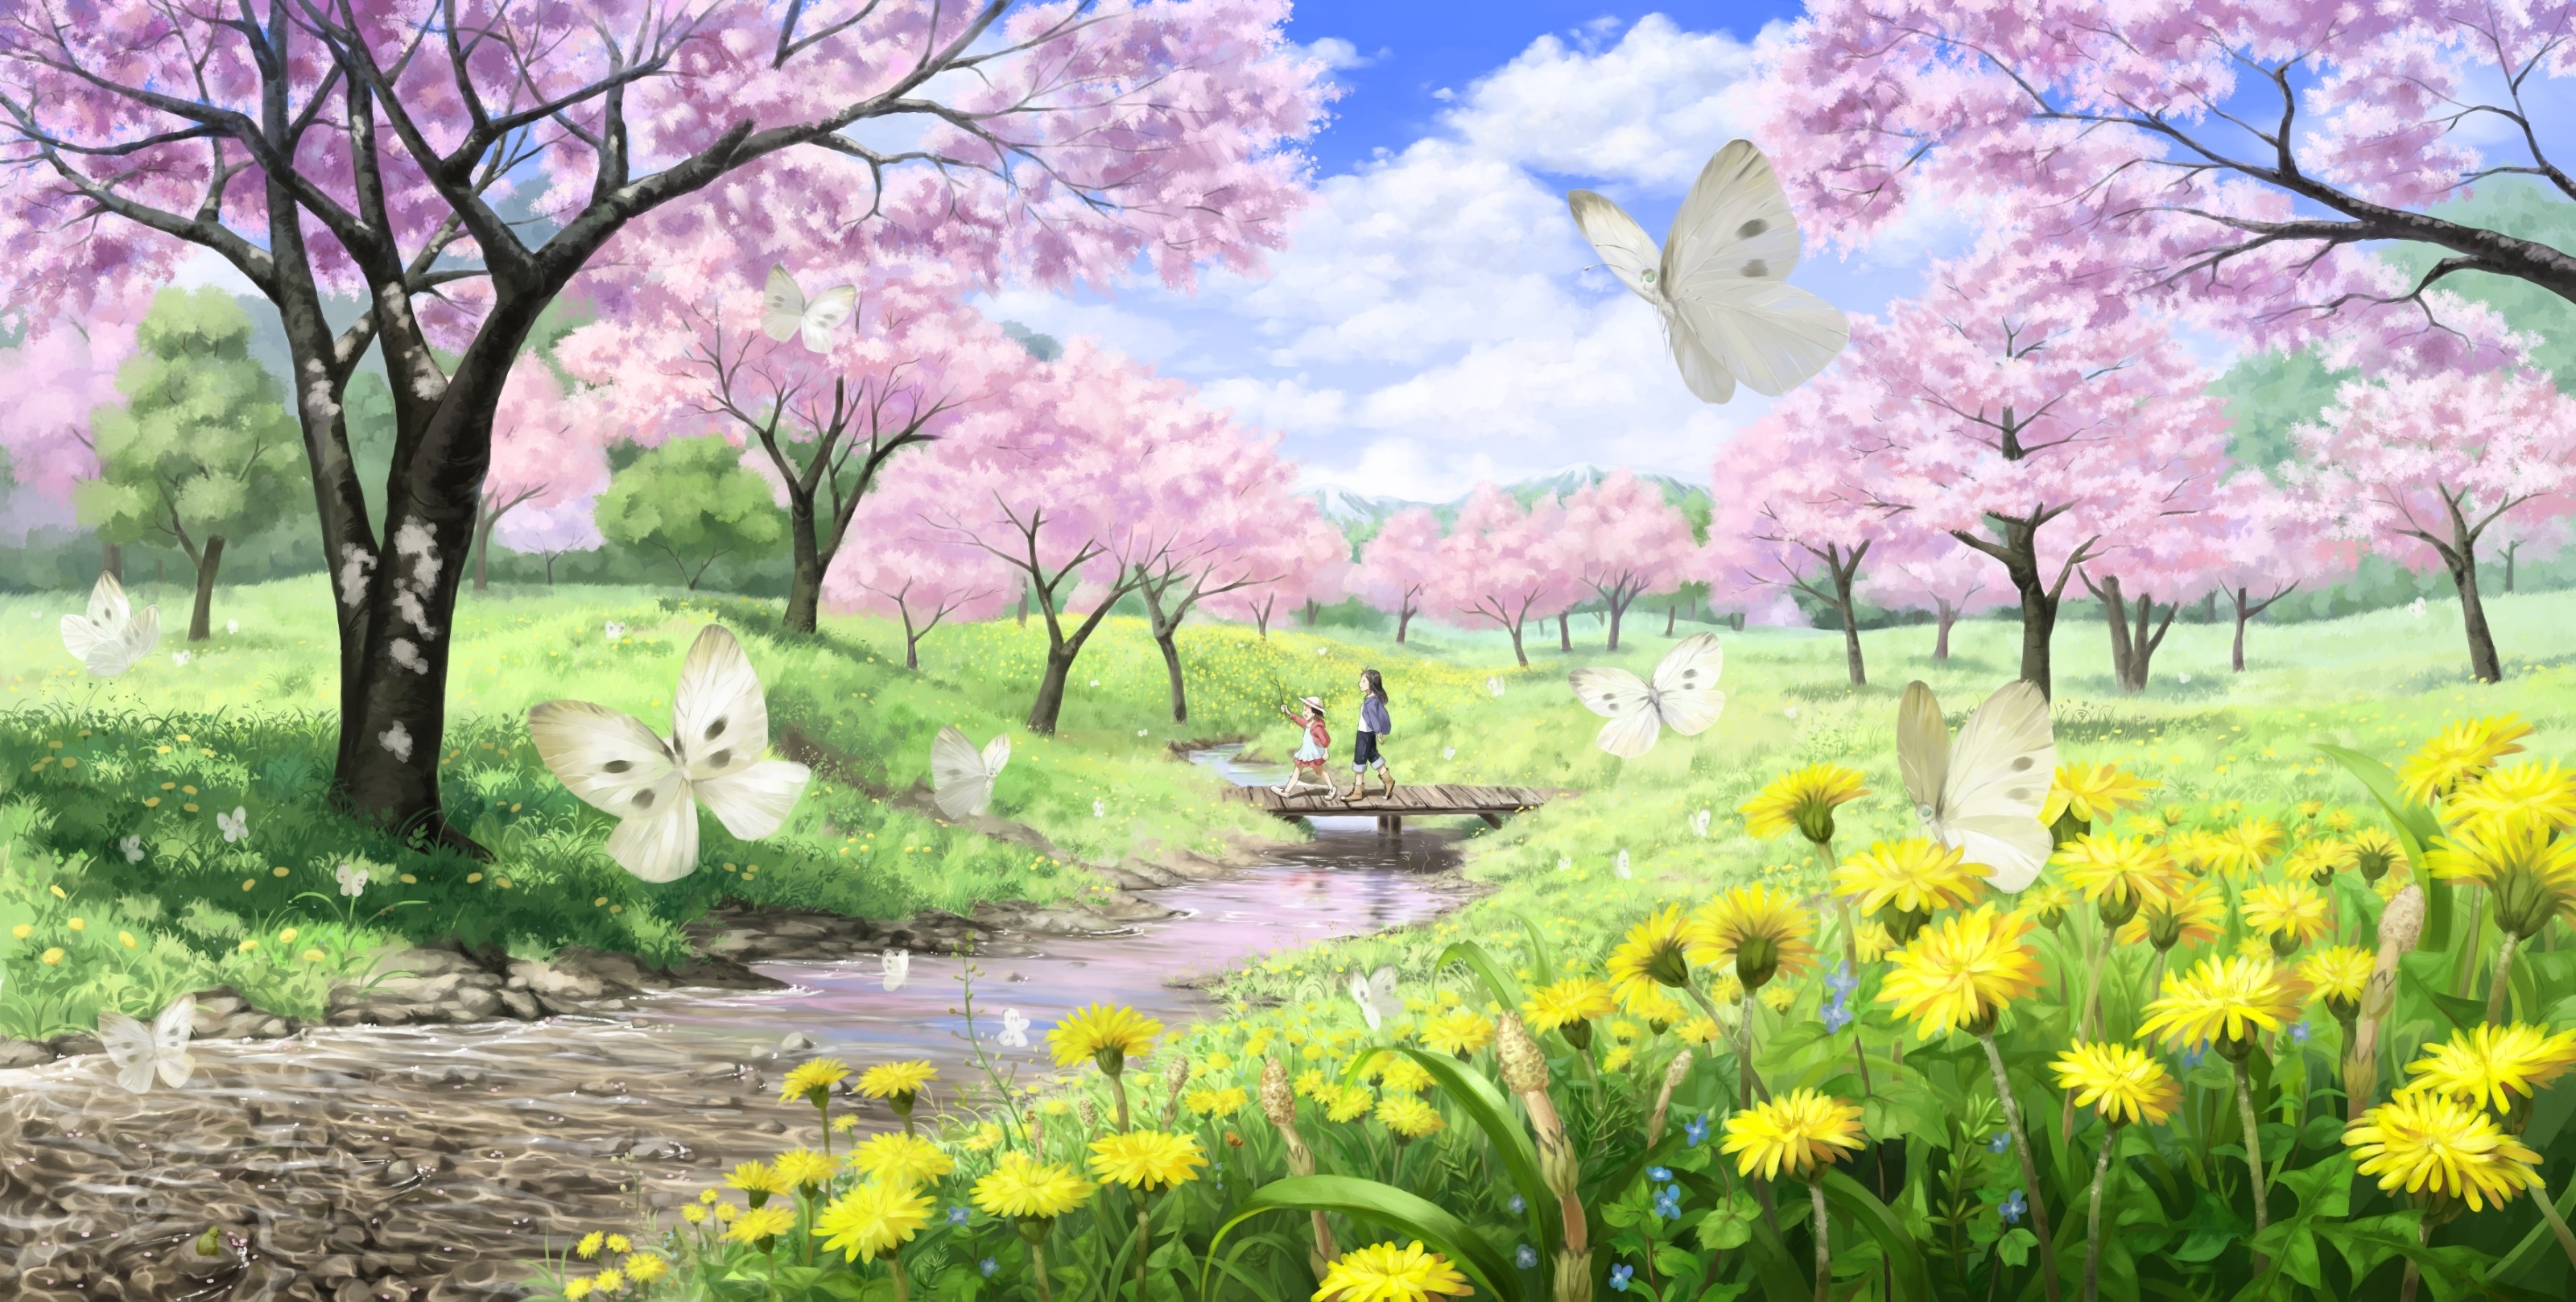 Spring Scenes Wallpaper Image